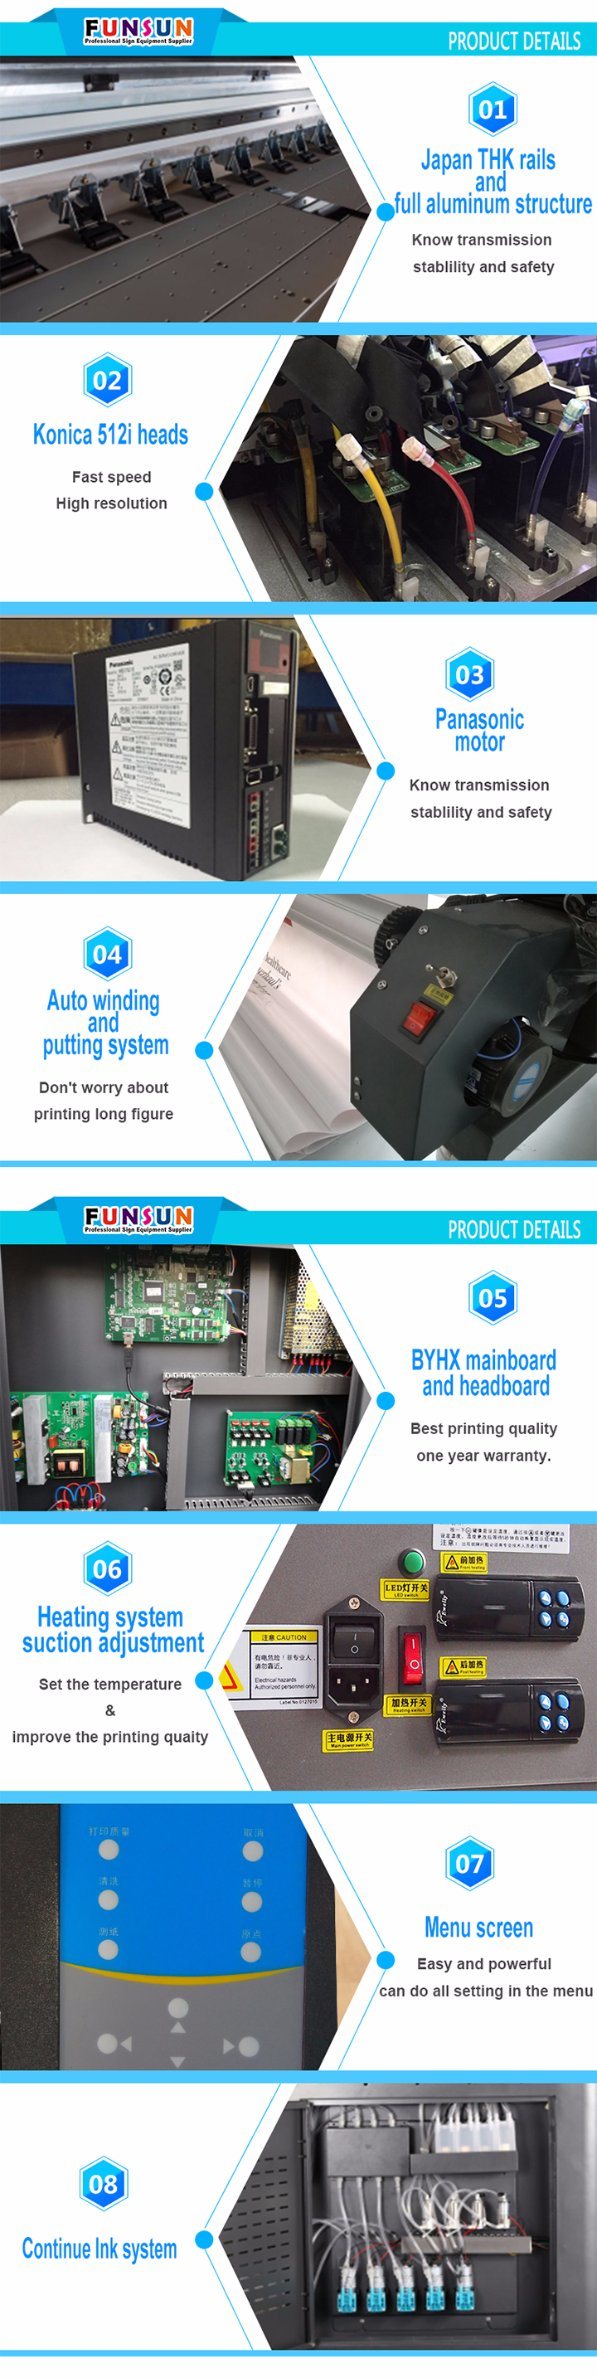 Funsunjet Fs-3208K 3.2m Price Flex Banner Printer (eight 512I heads, fast speed up to 240sqm/h)